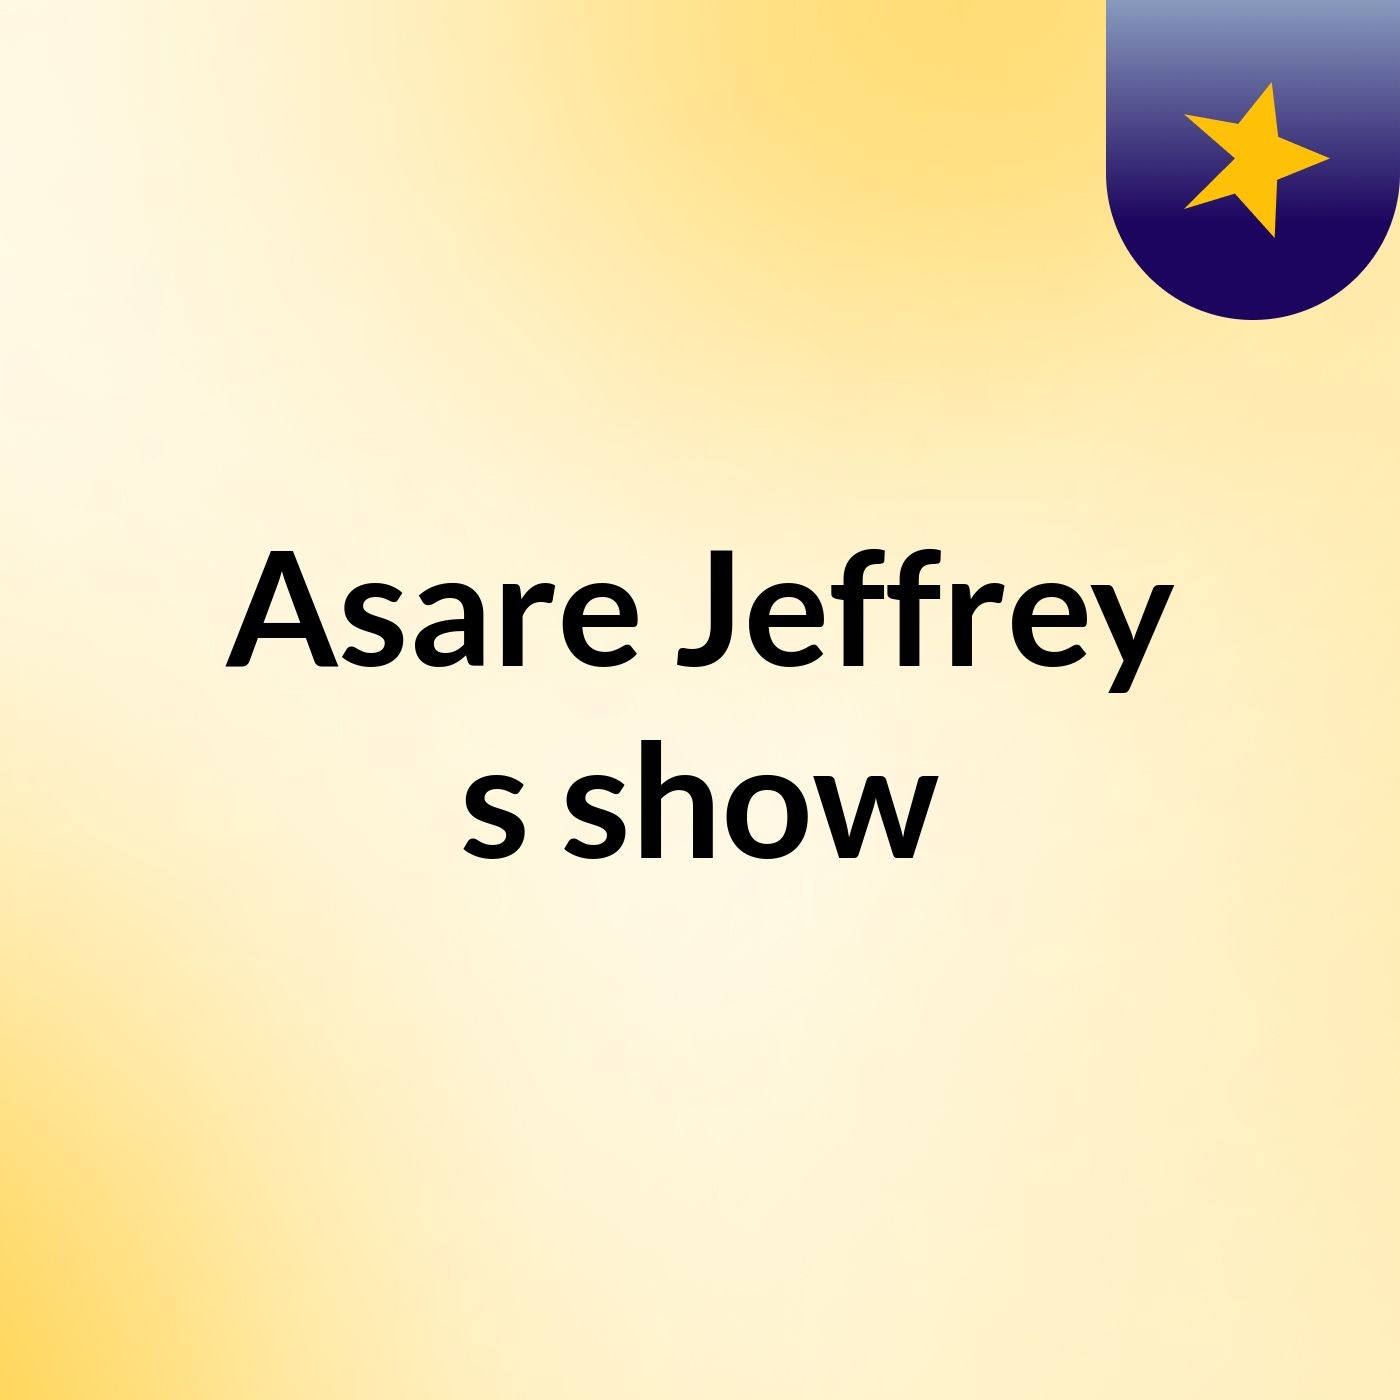 Asare Jeffrey's show